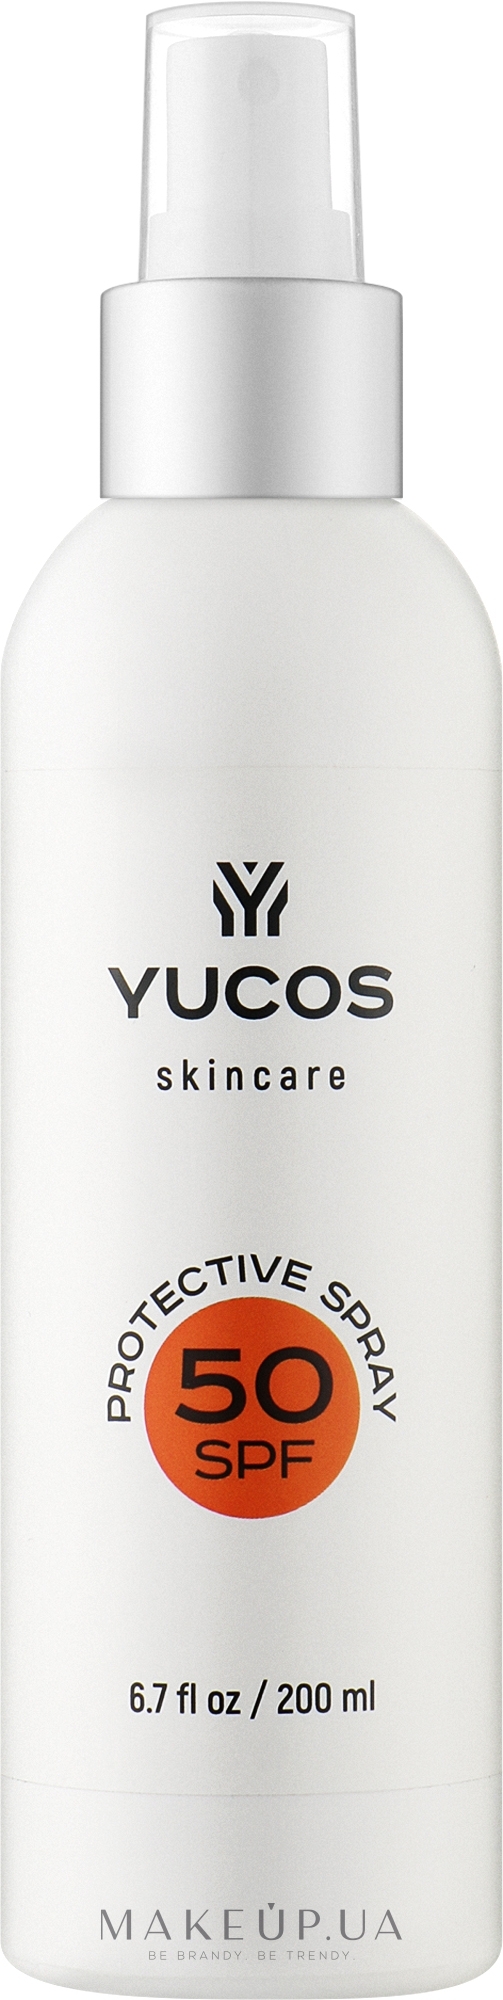 Солнцезащитный спрей для тела SPF 50 - Yucos Skincare Protective Spray SPF 50 — фото 200ml